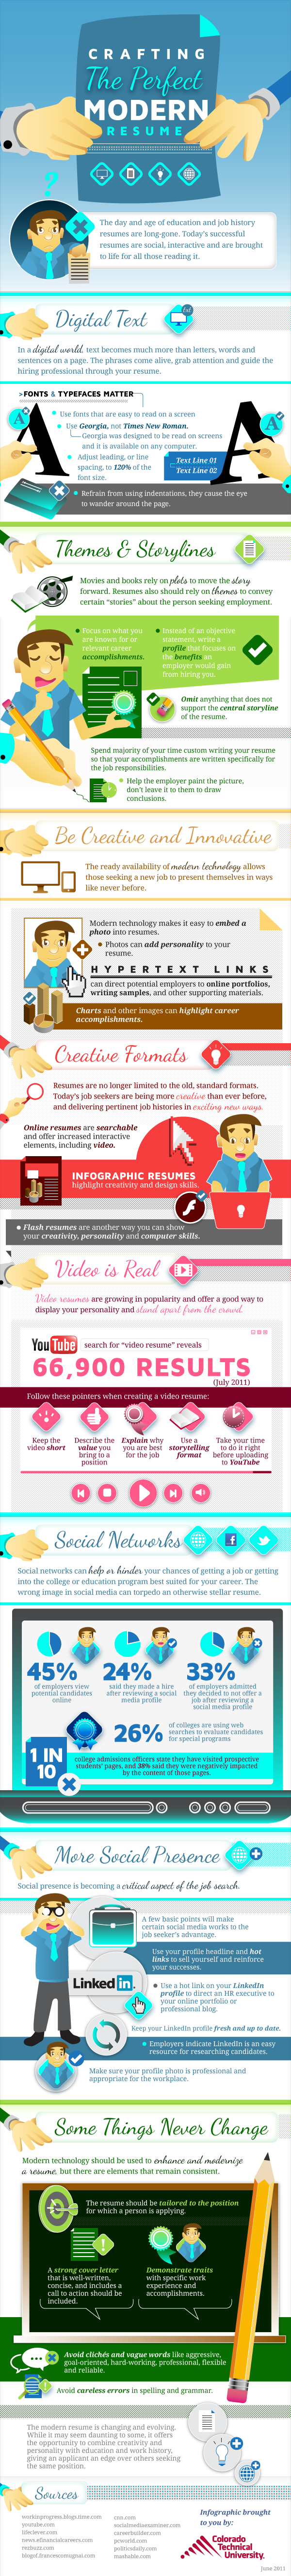 Mashable_Infographic_Modern_Resume